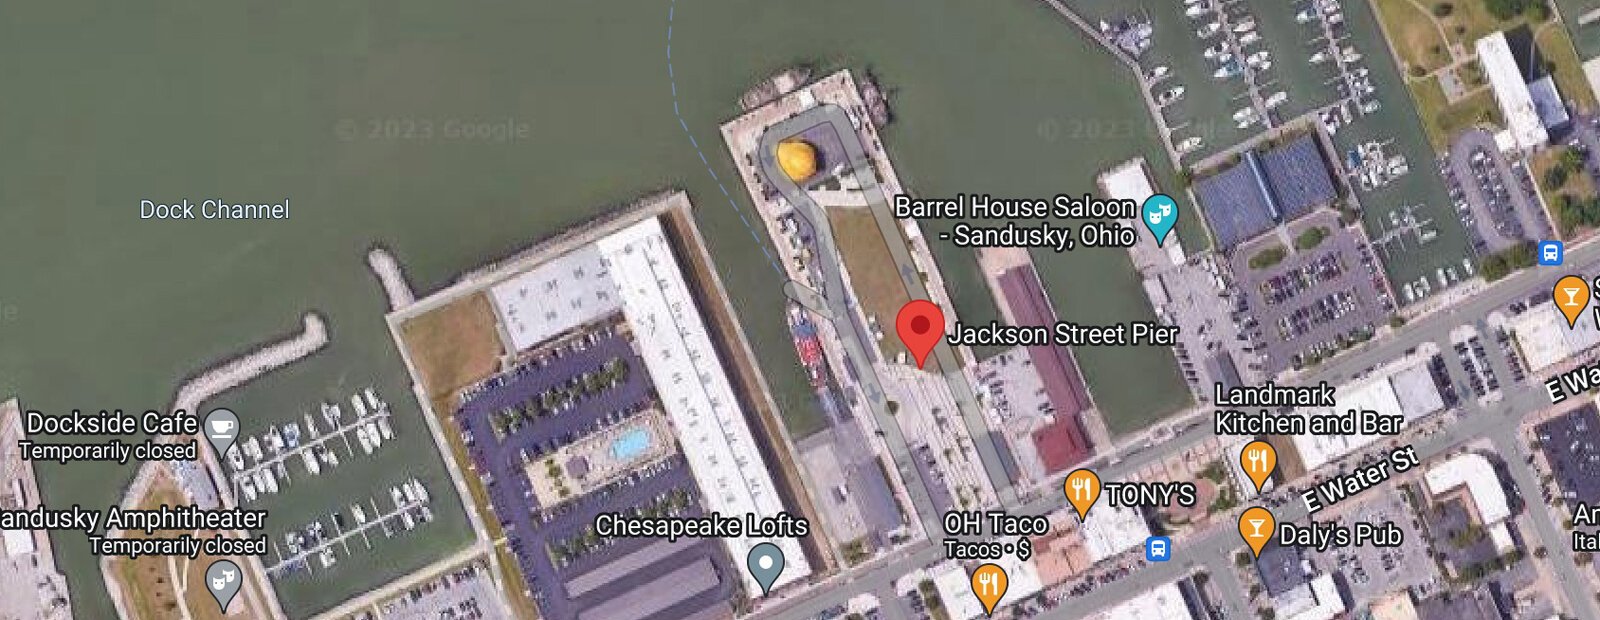 Mama Ducks stars in the Google Earth image of downtown Sandusky. 